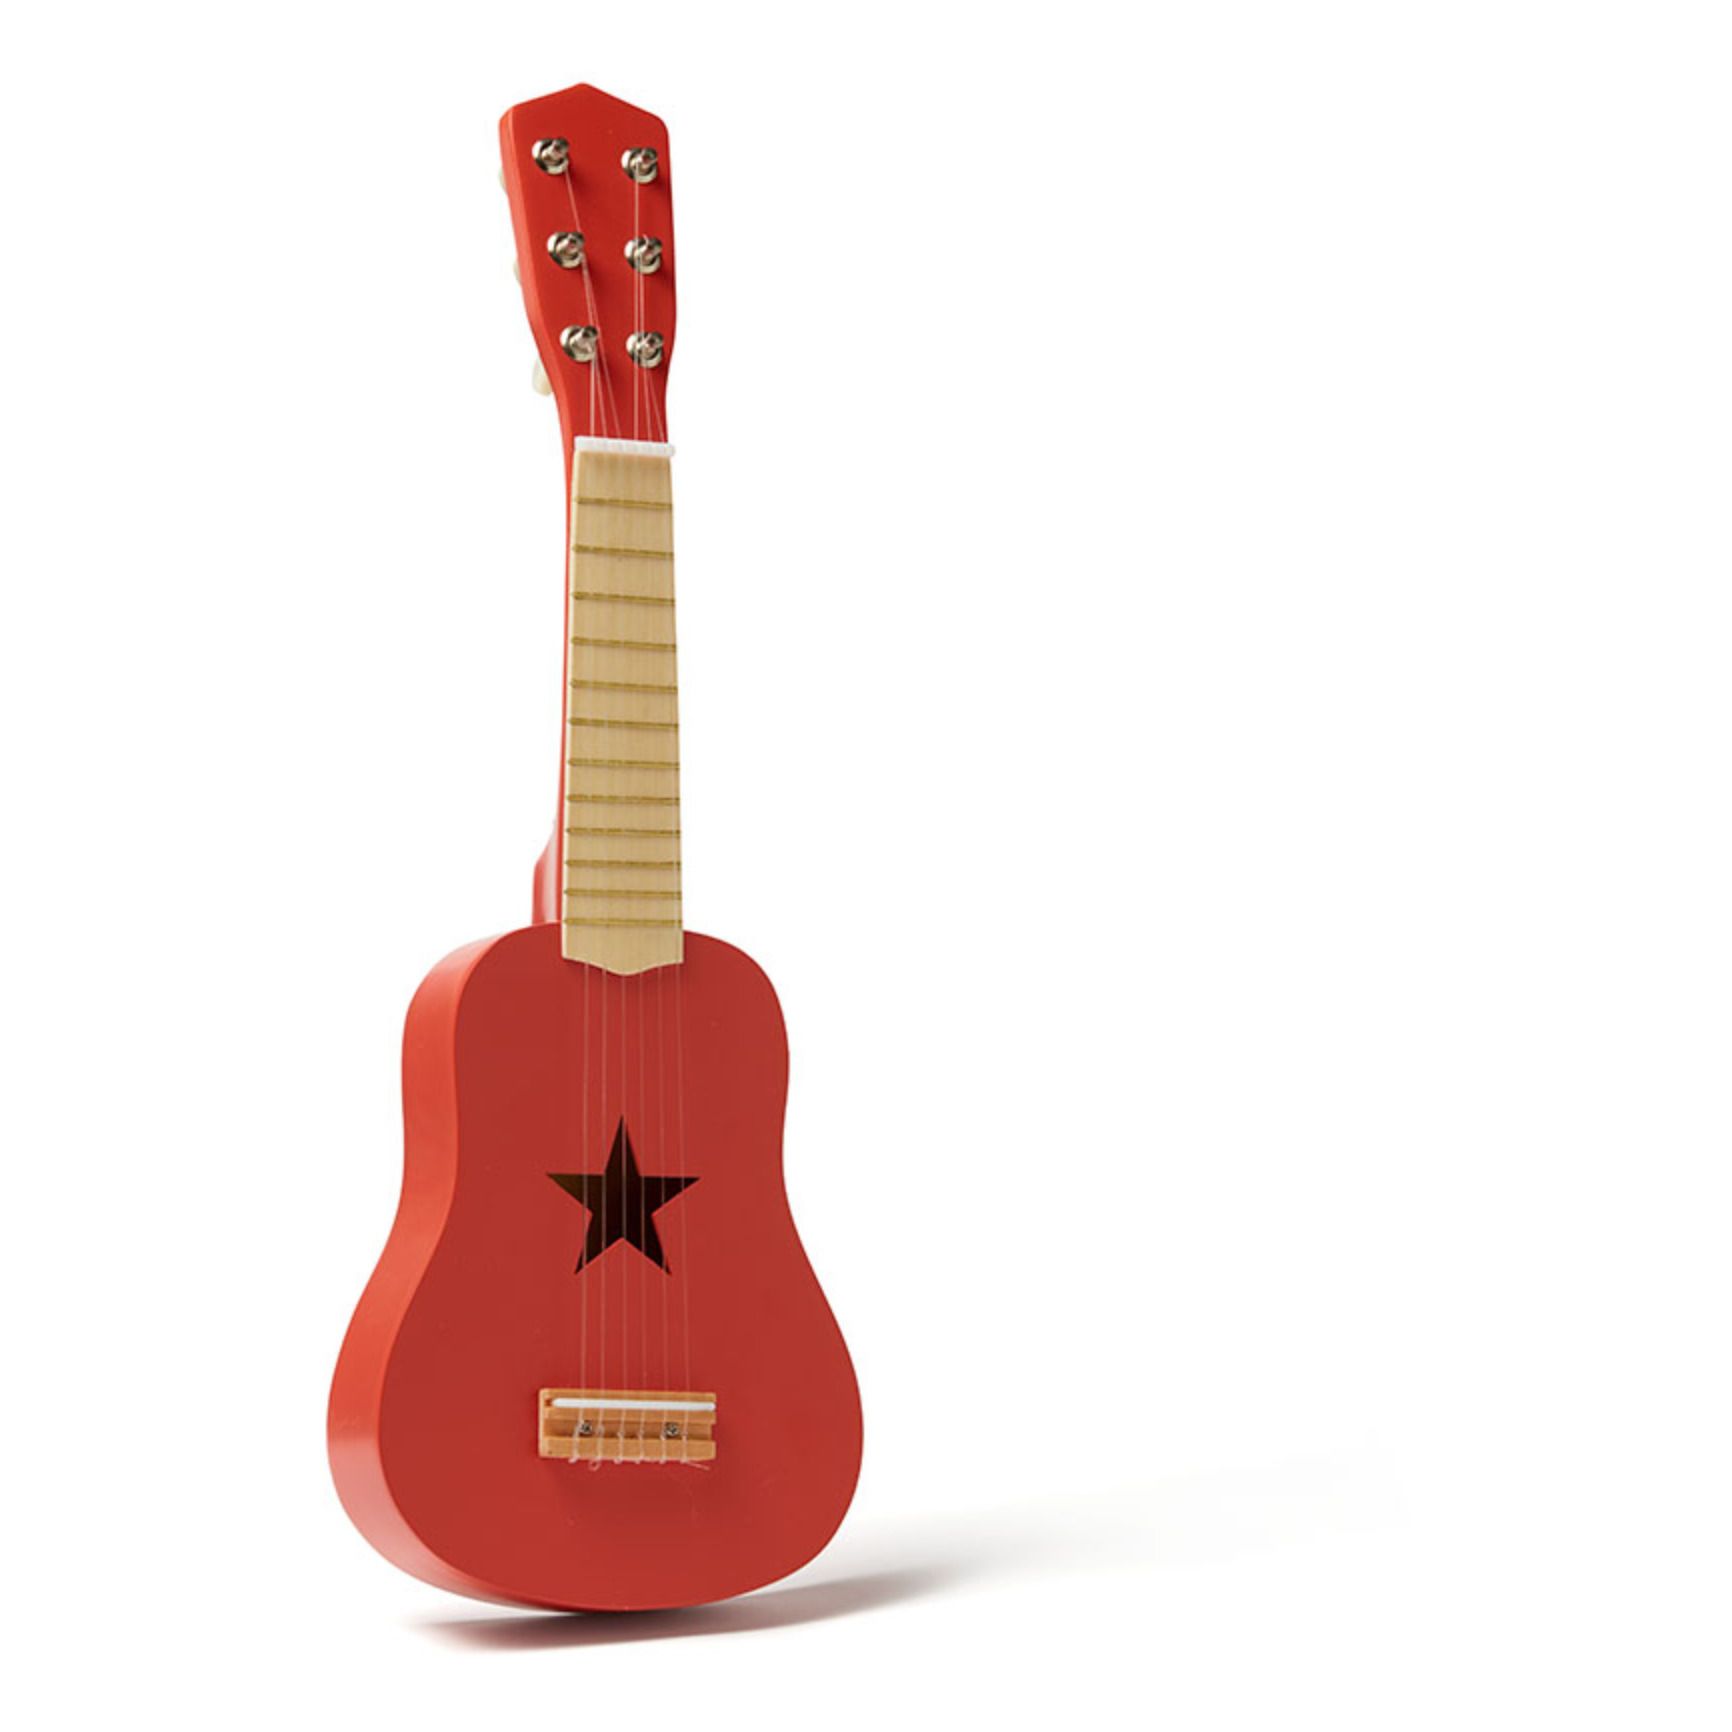 Kid's Concept Wooden Children's Guitar Red one size unisex